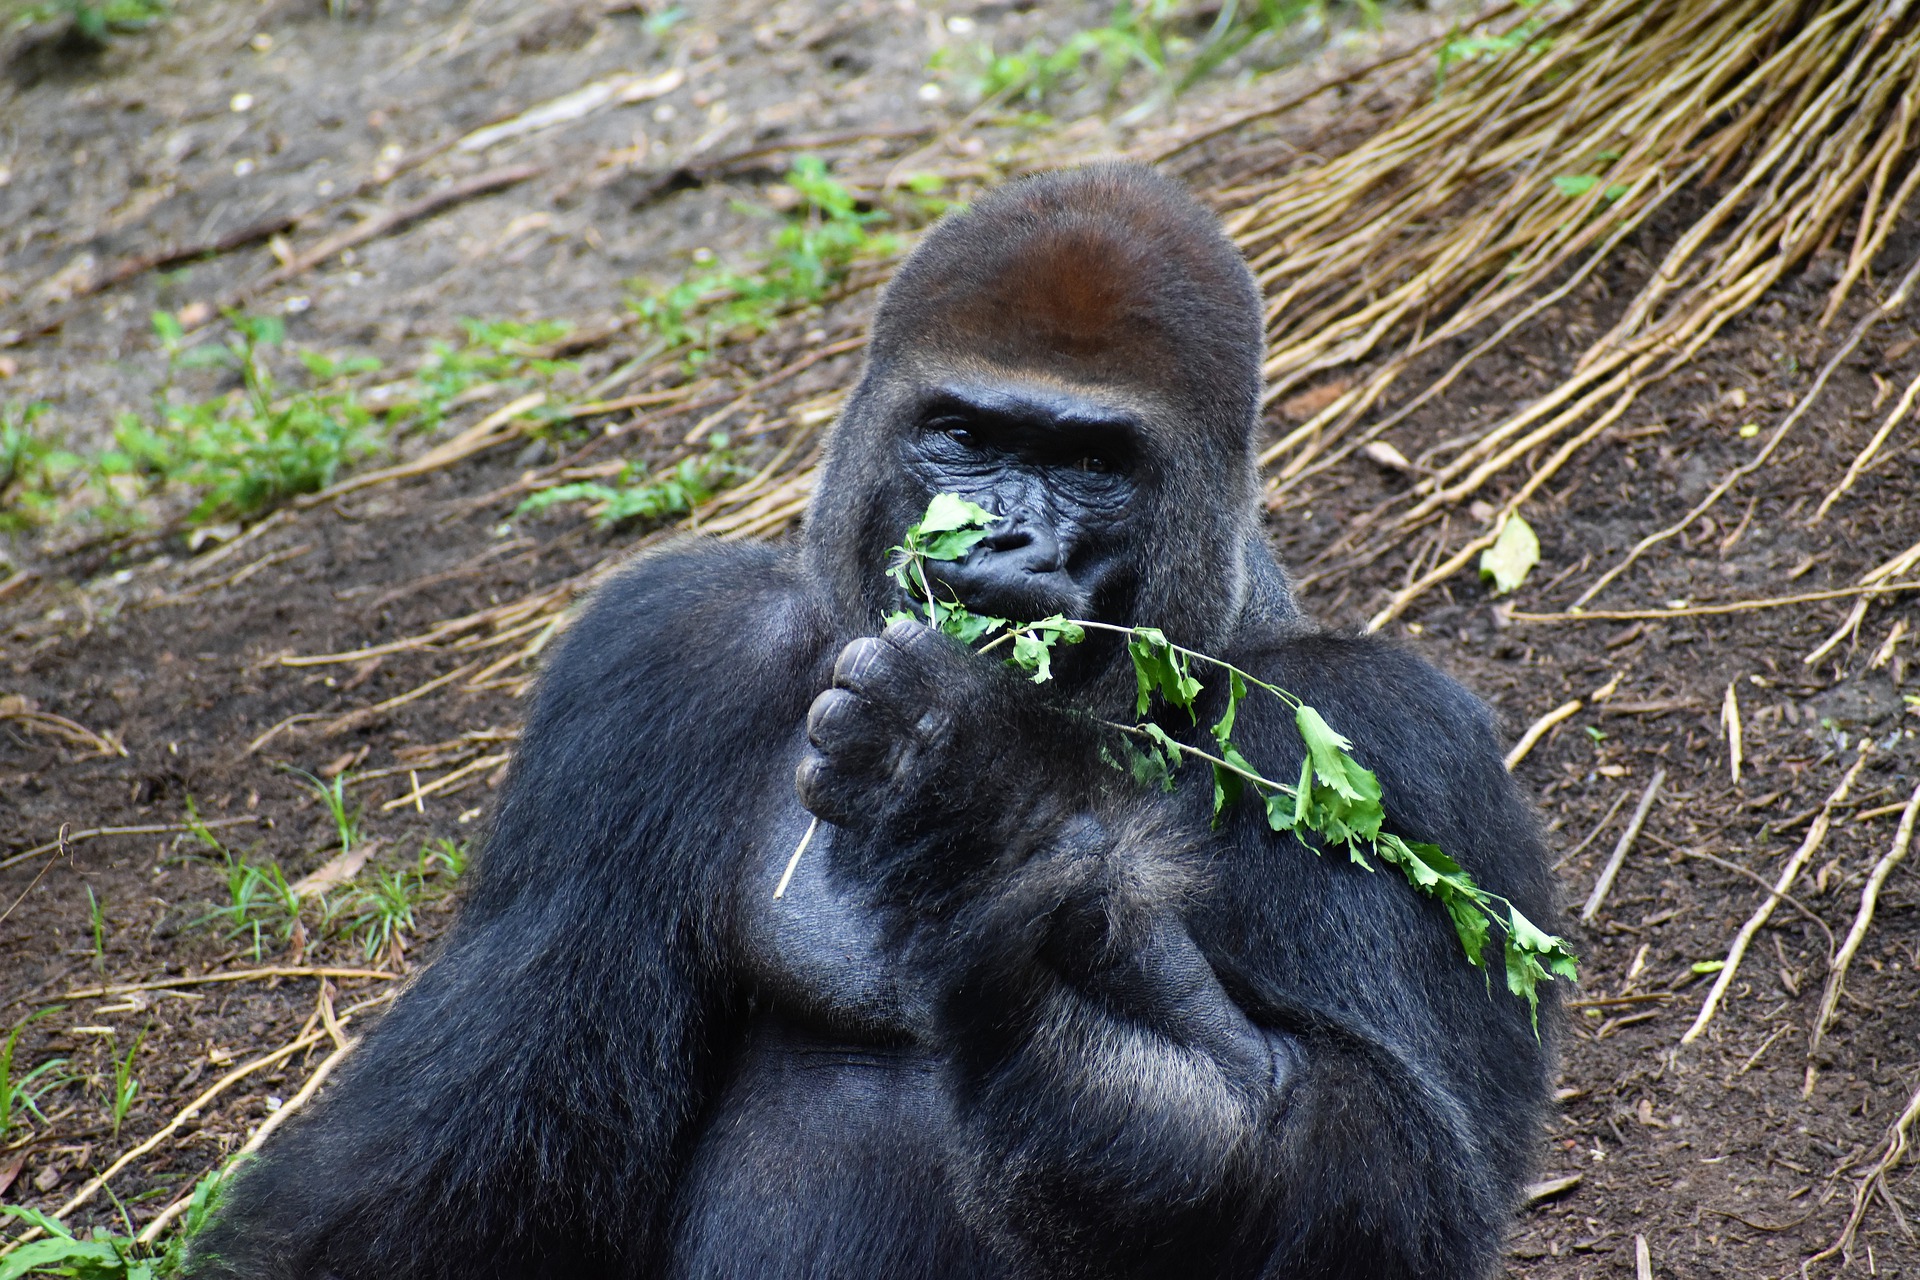 Wild Gorillas Sing And Hum During Their Favorite Meals